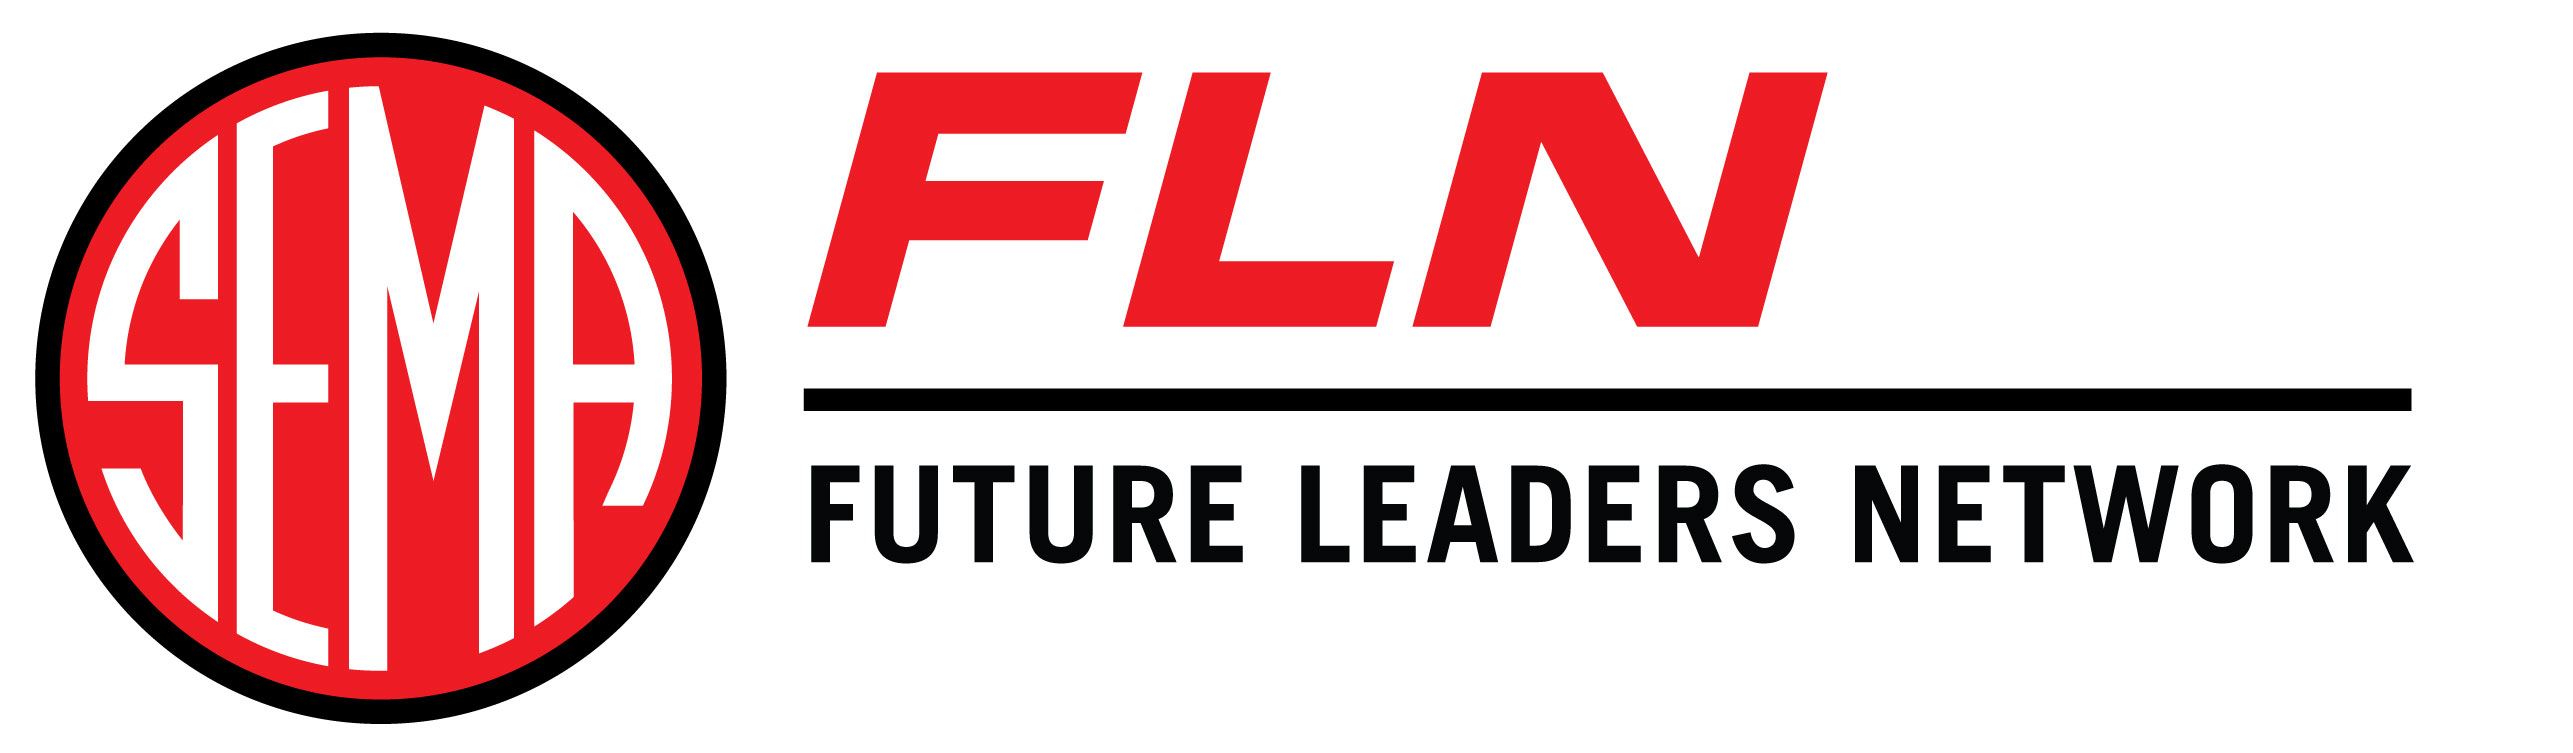 Future Leaders Network (FLN) - Logo